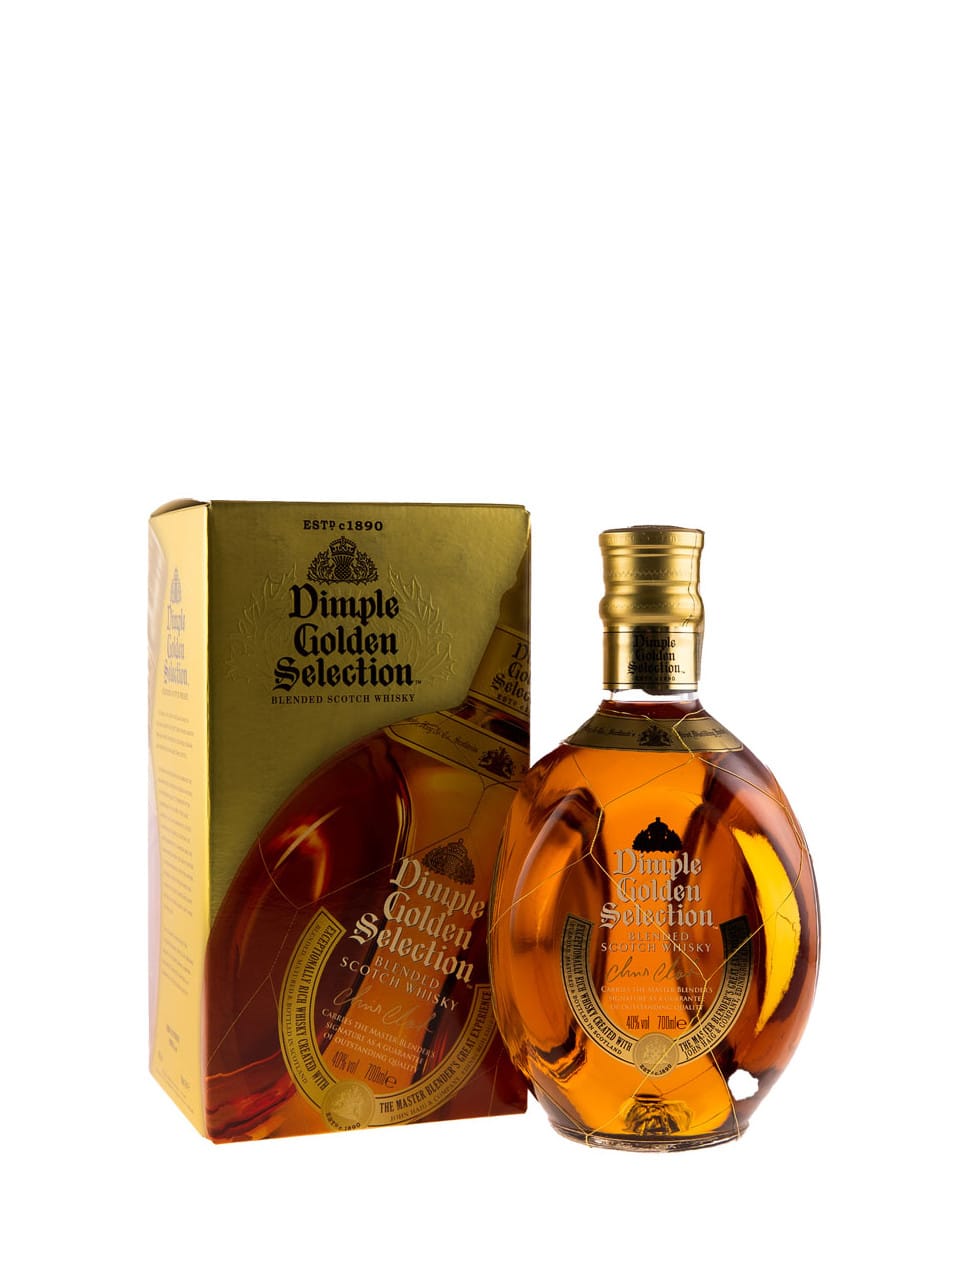 Whisky Dimple Golden RON sticle Selection livrare FanCurier 26 stoc 24-48h| | in limitat 116